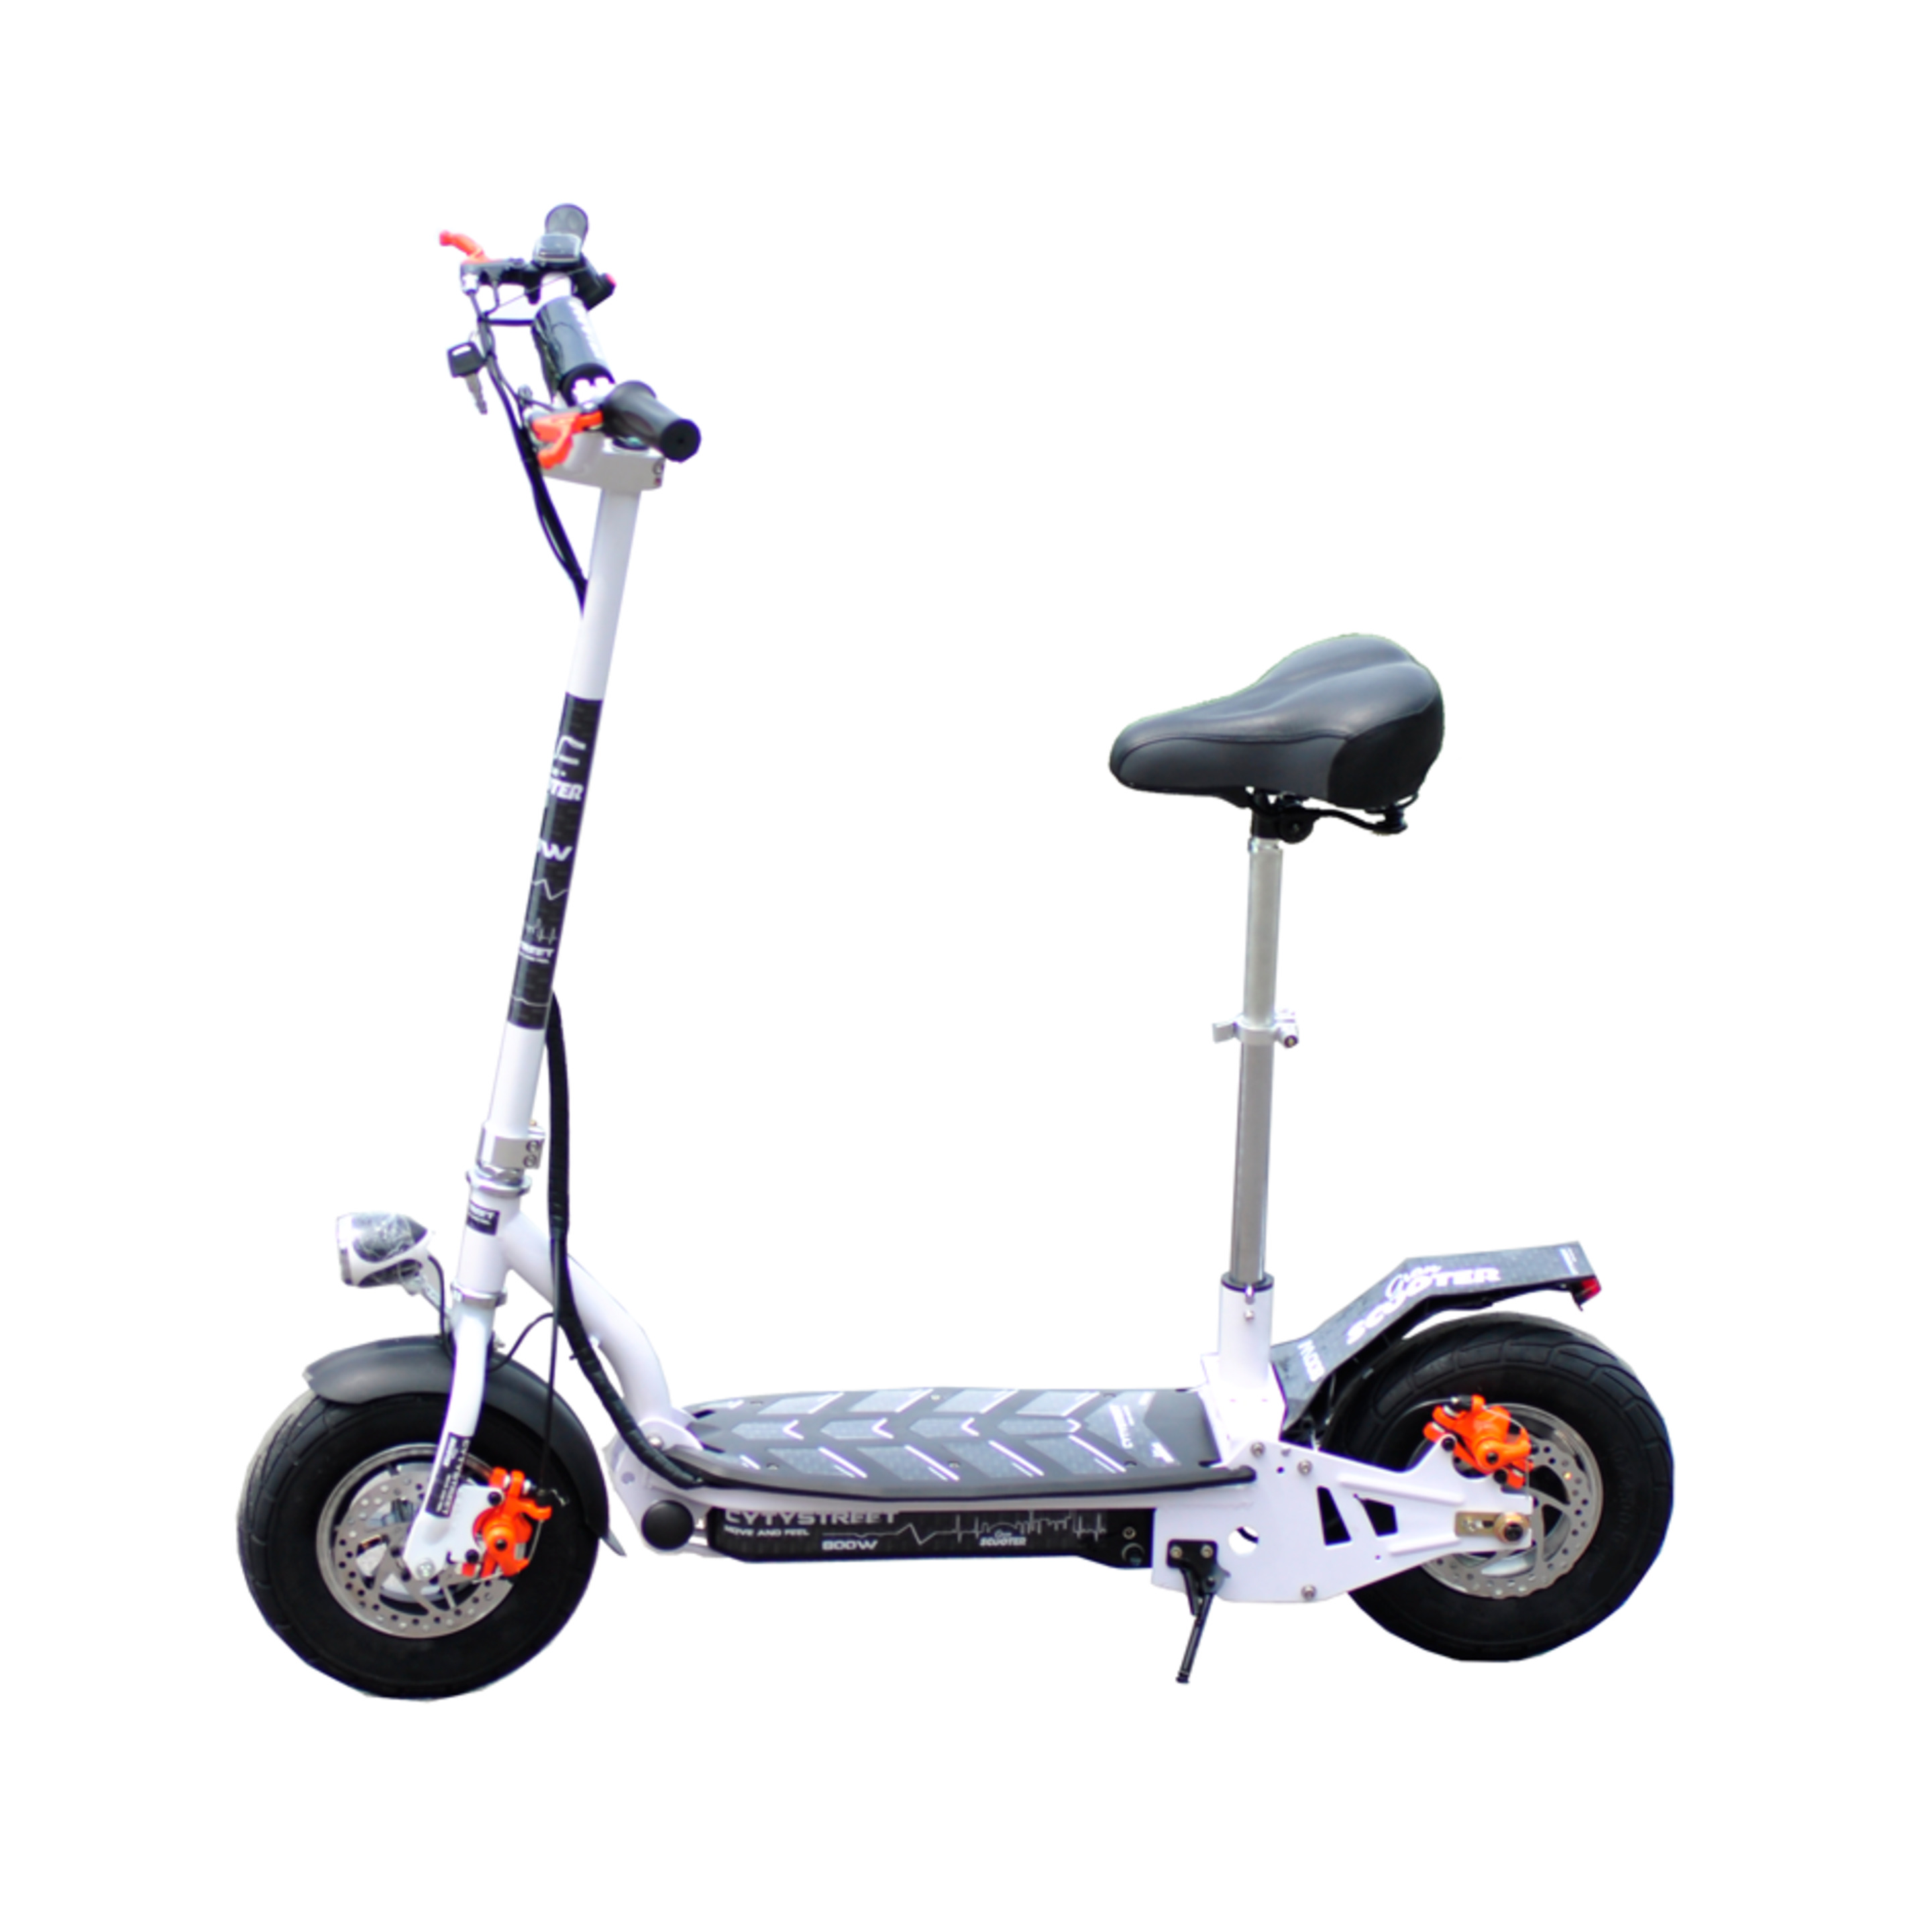 Gran-scooter Citystreet Eléctrico 1500w - blanco - 